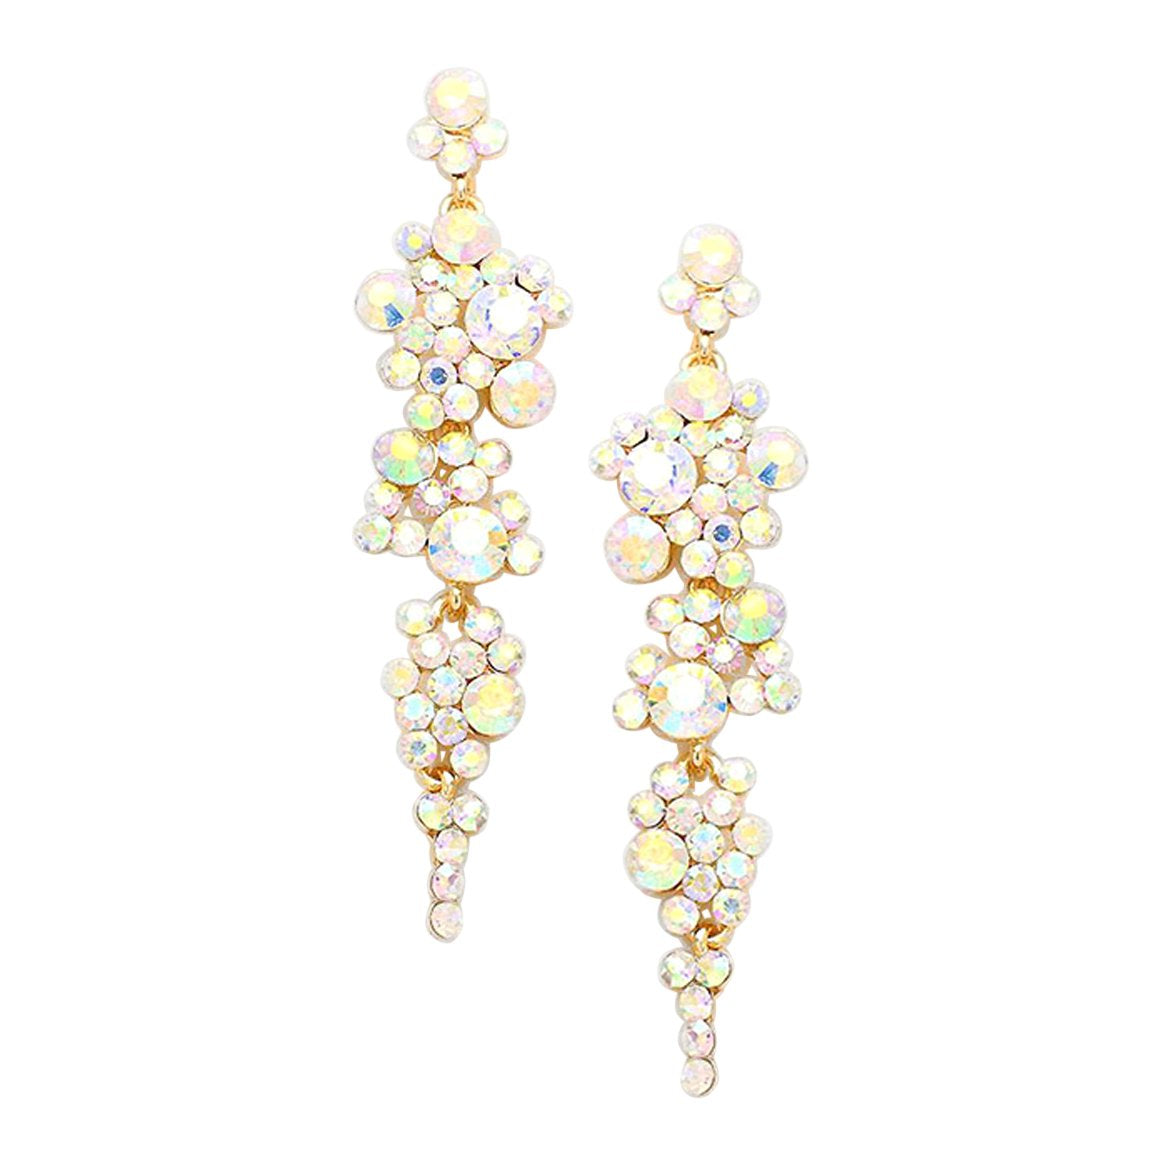 Crystal Rhinestone Bubble Dangle Statement Earrings (Aurora Borealis Crystal Gold Tone)